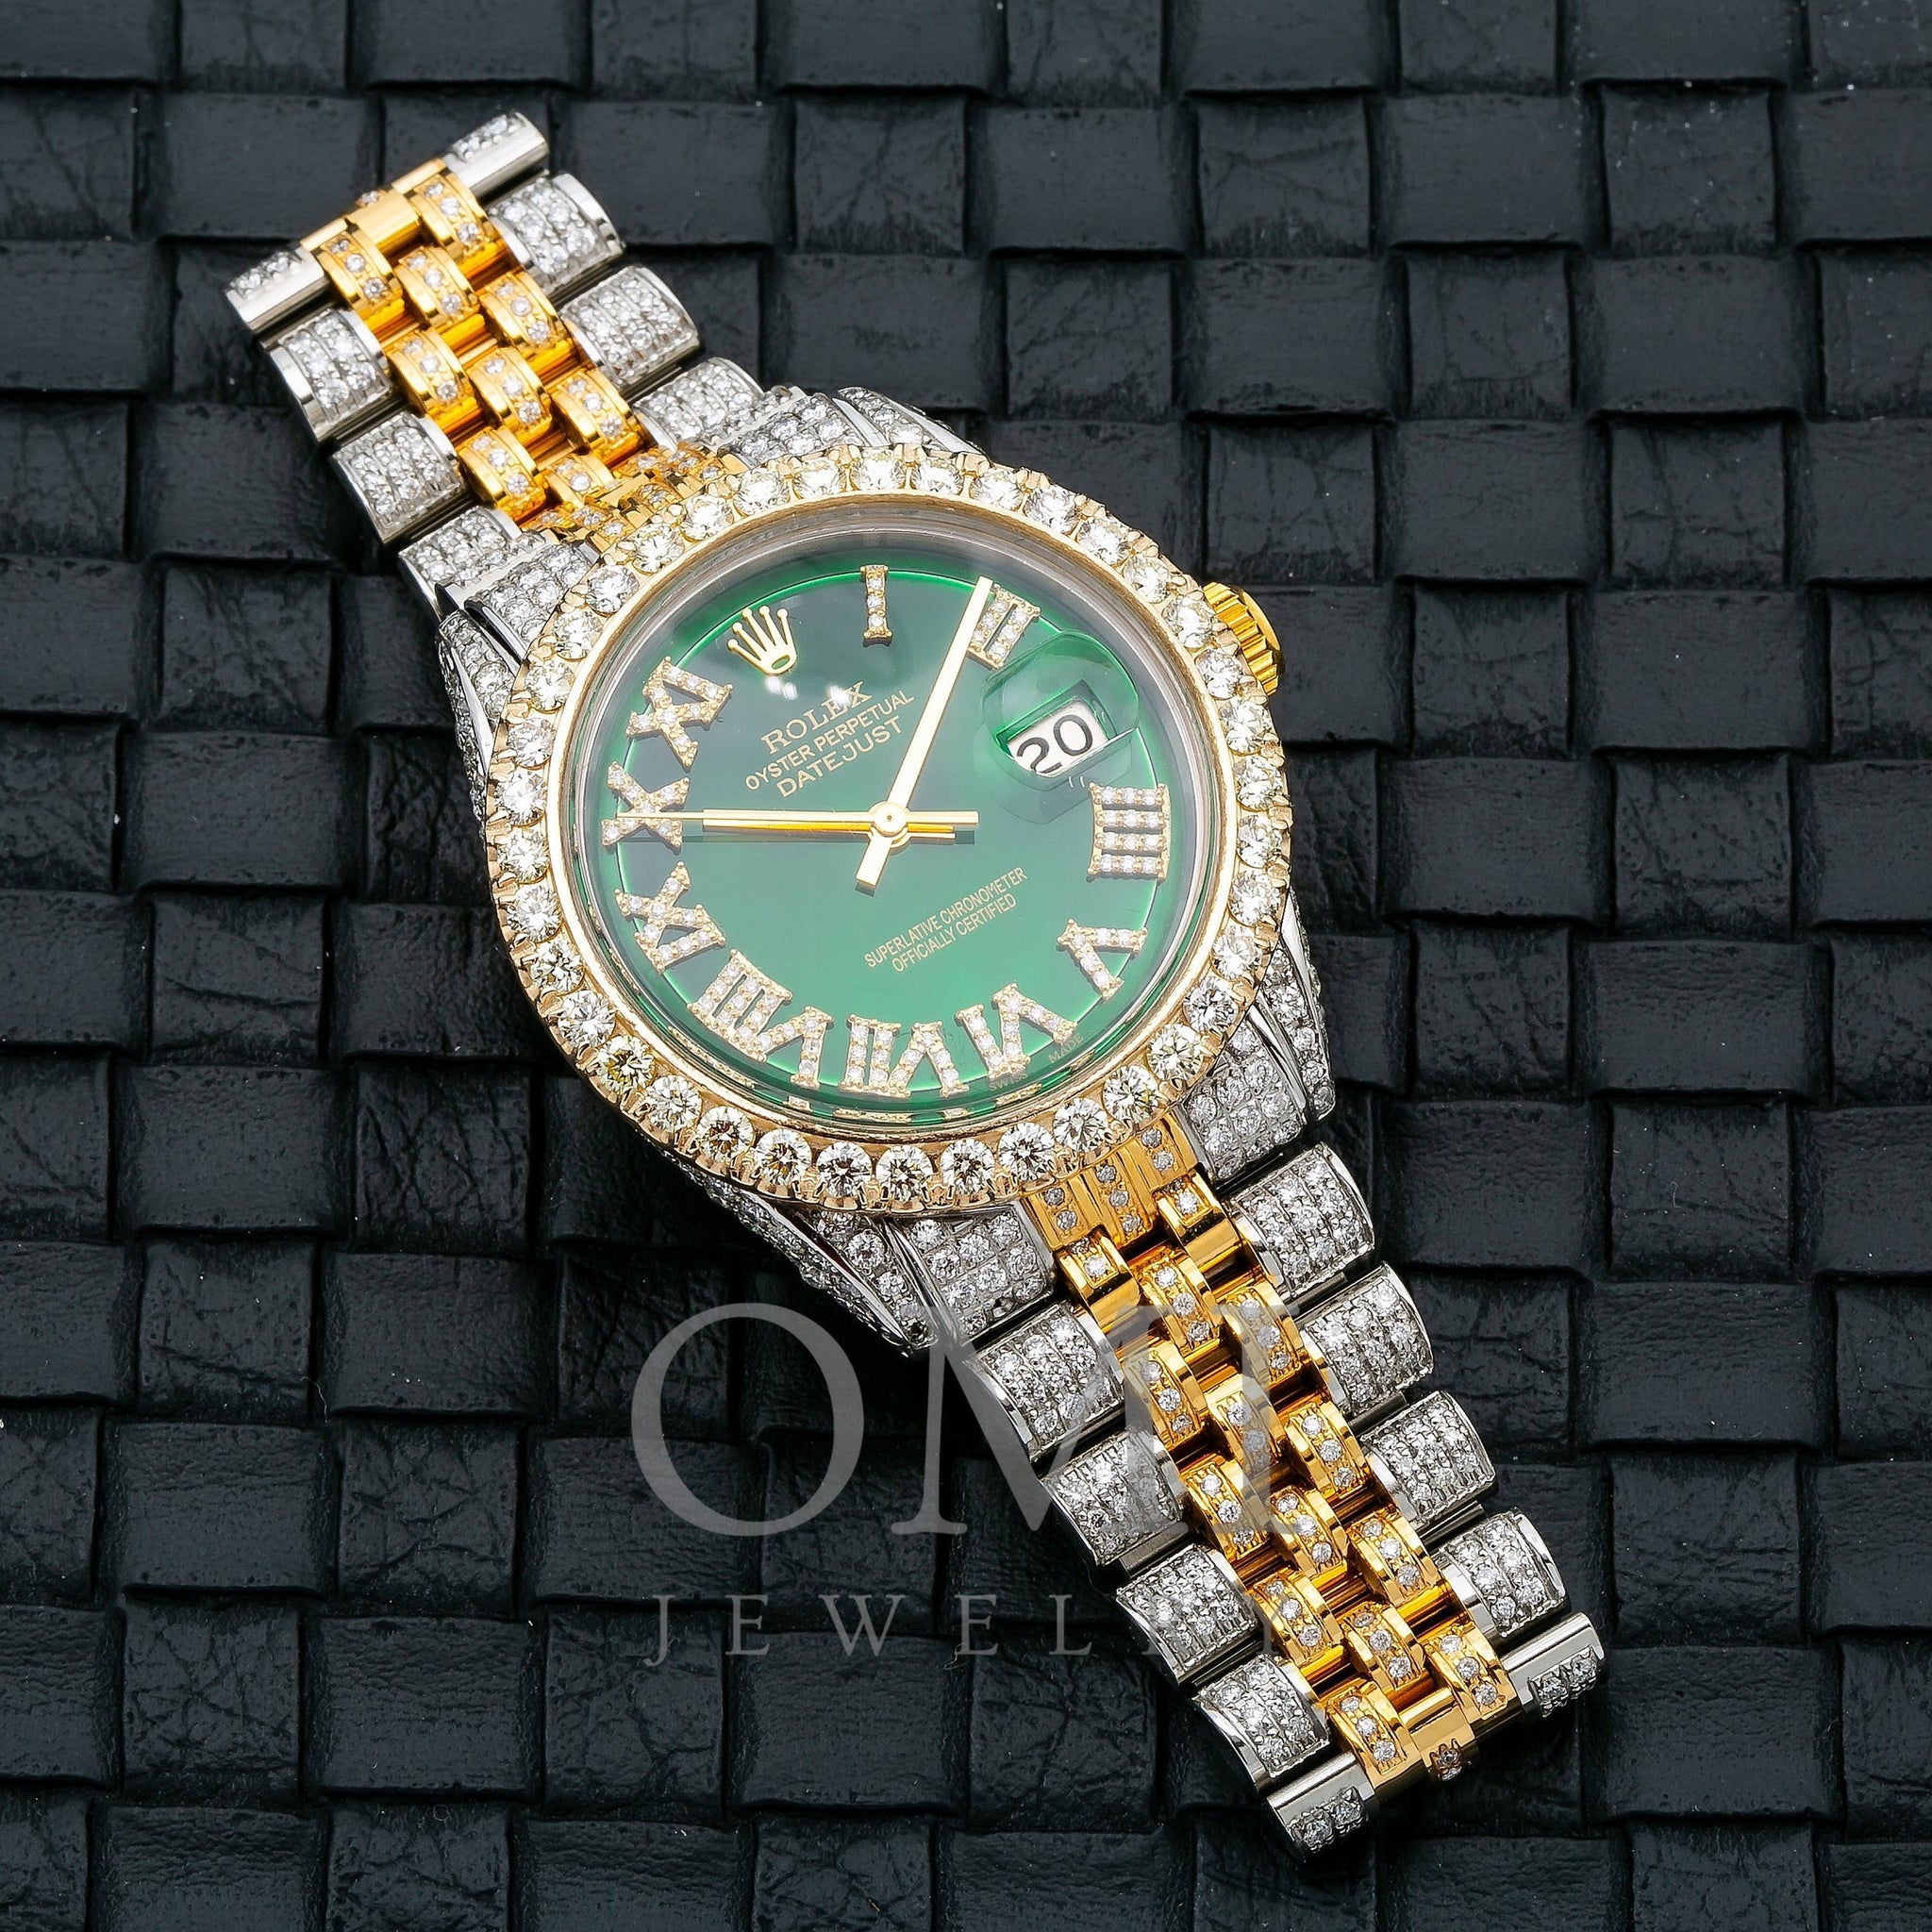 Rolex Datejust 1601 36MM Green Diamond Dial With 8.25 CT Diamonds